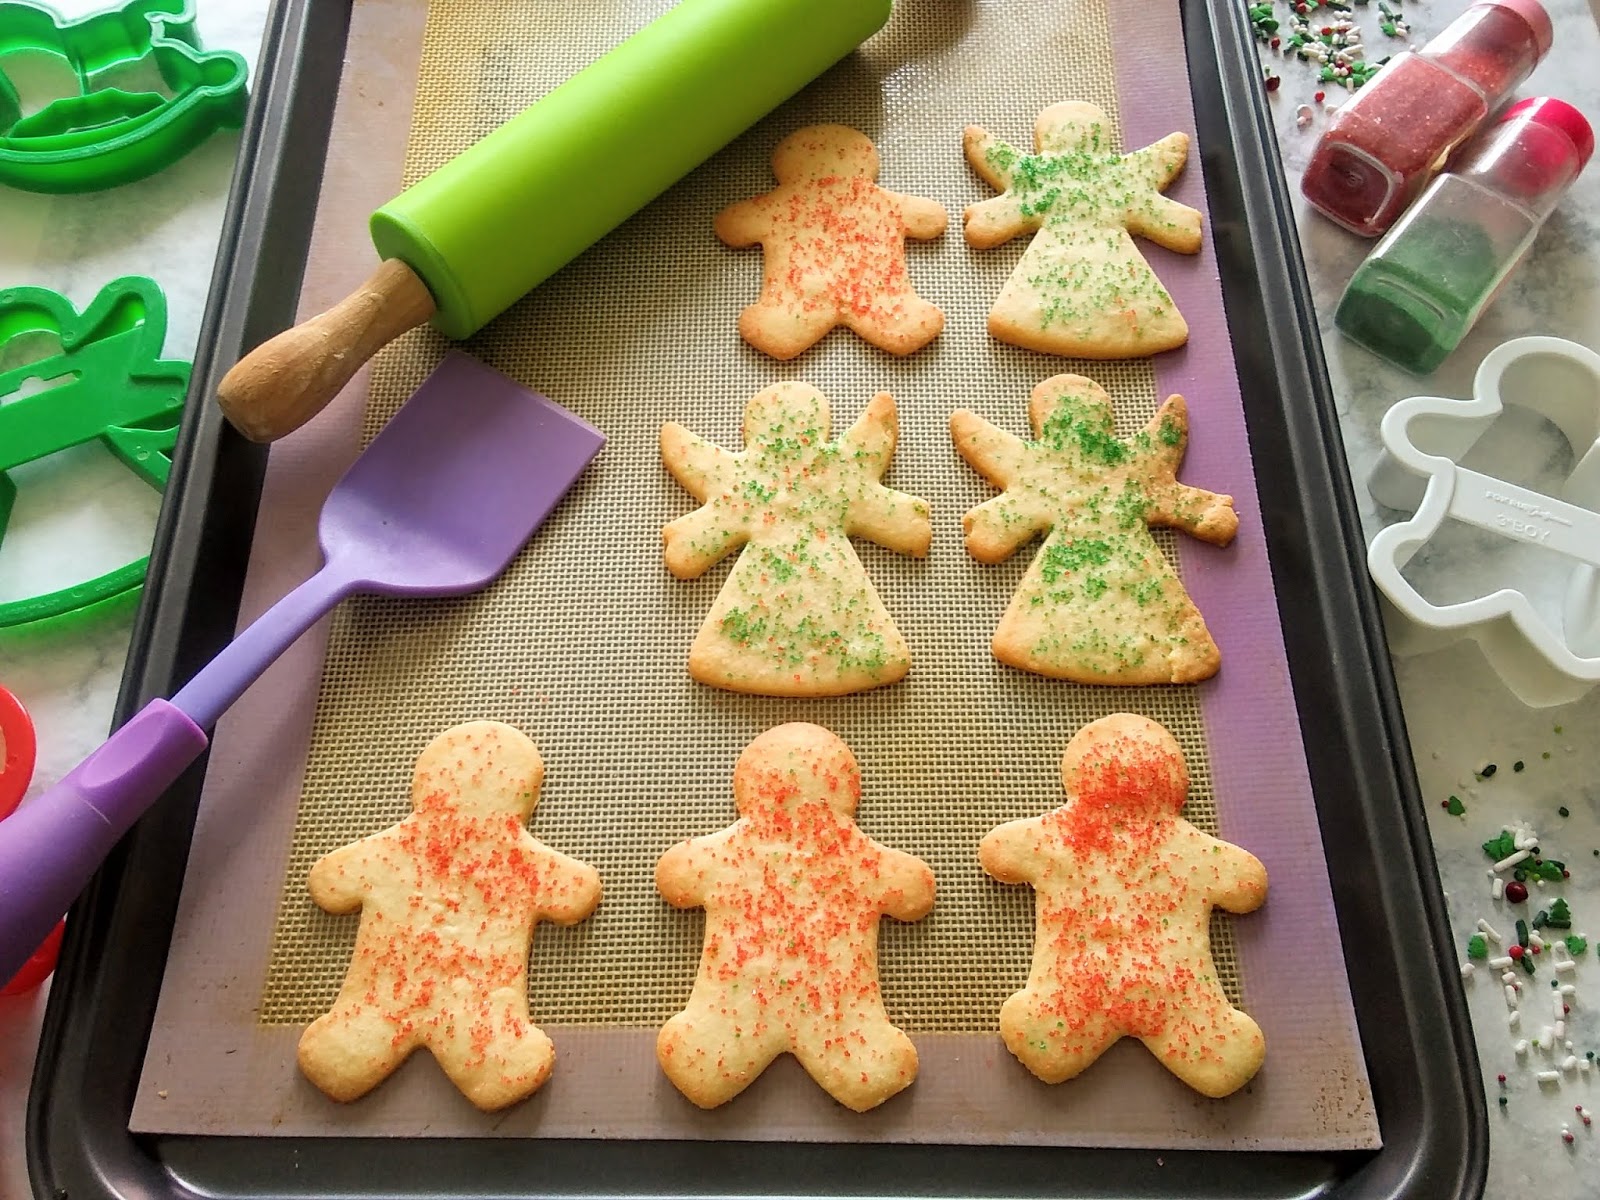 BEST Sugar Cookie Recipe for Decorating